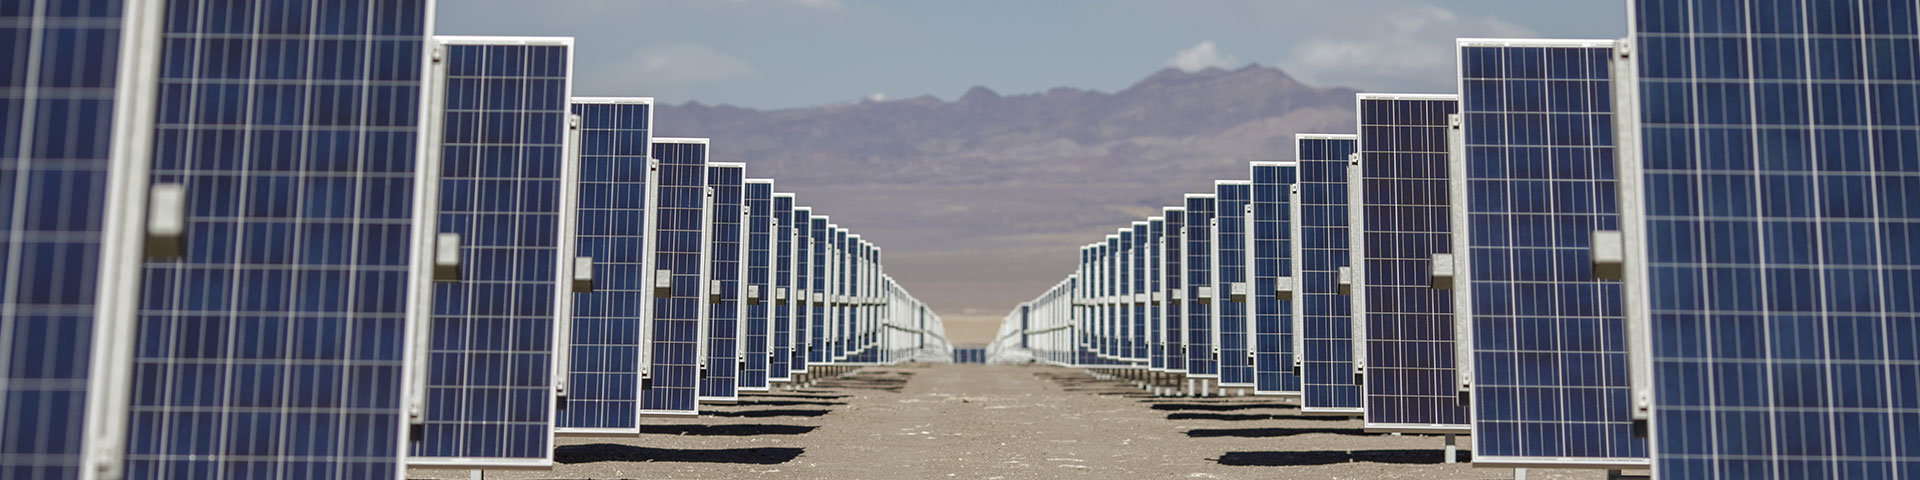 Dos filas de paneles solares